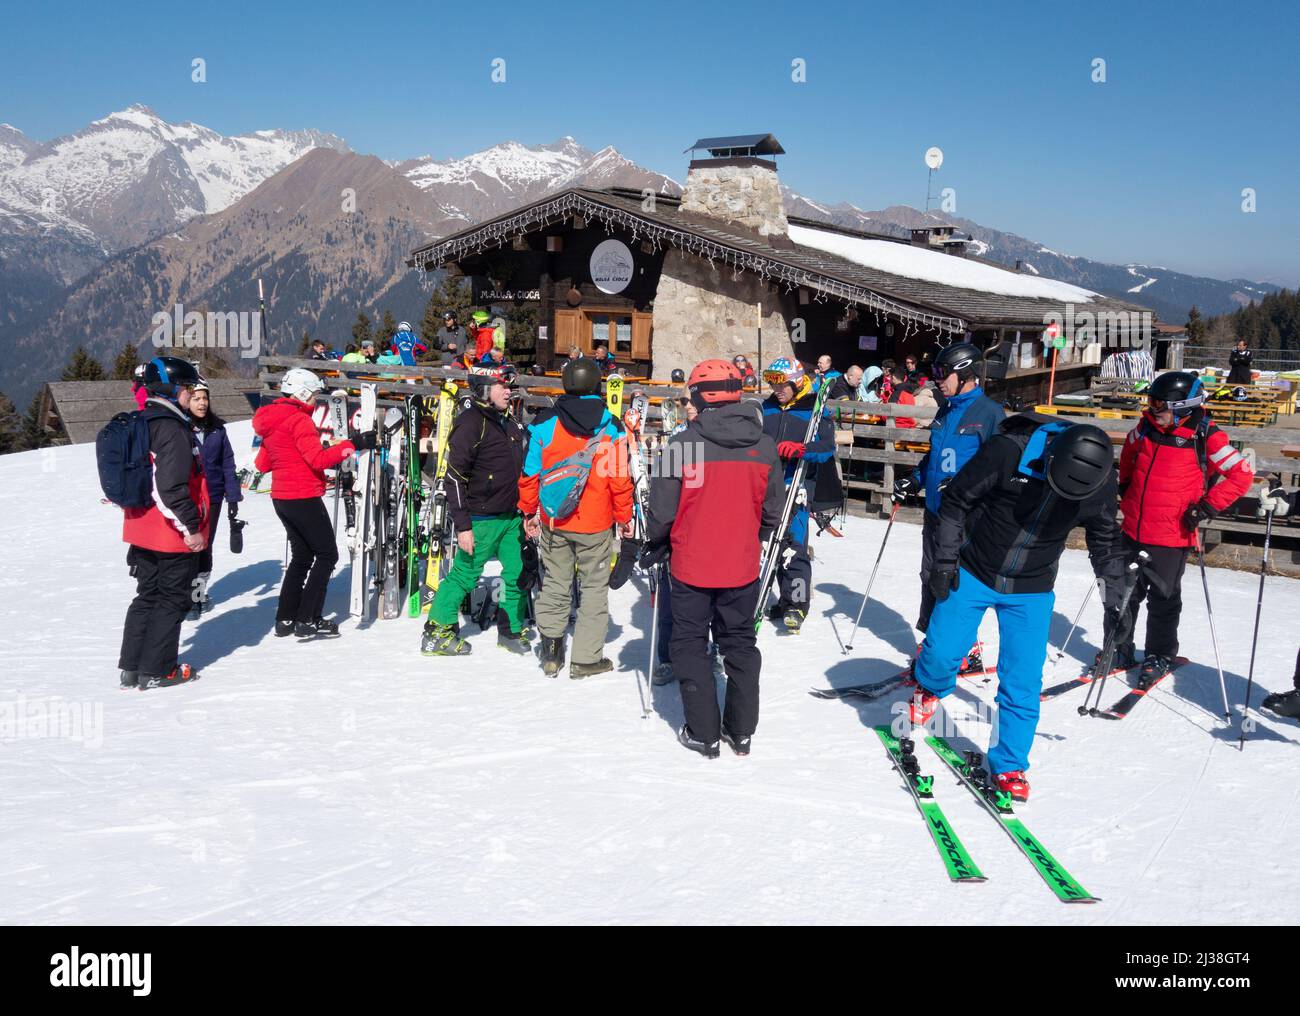 Italy Ski holiday scene - skiers skiing to the Malga Croca mountain restaurant and bar for food and drink, Pinzolo Dolomites Italy Europe Stock Photo